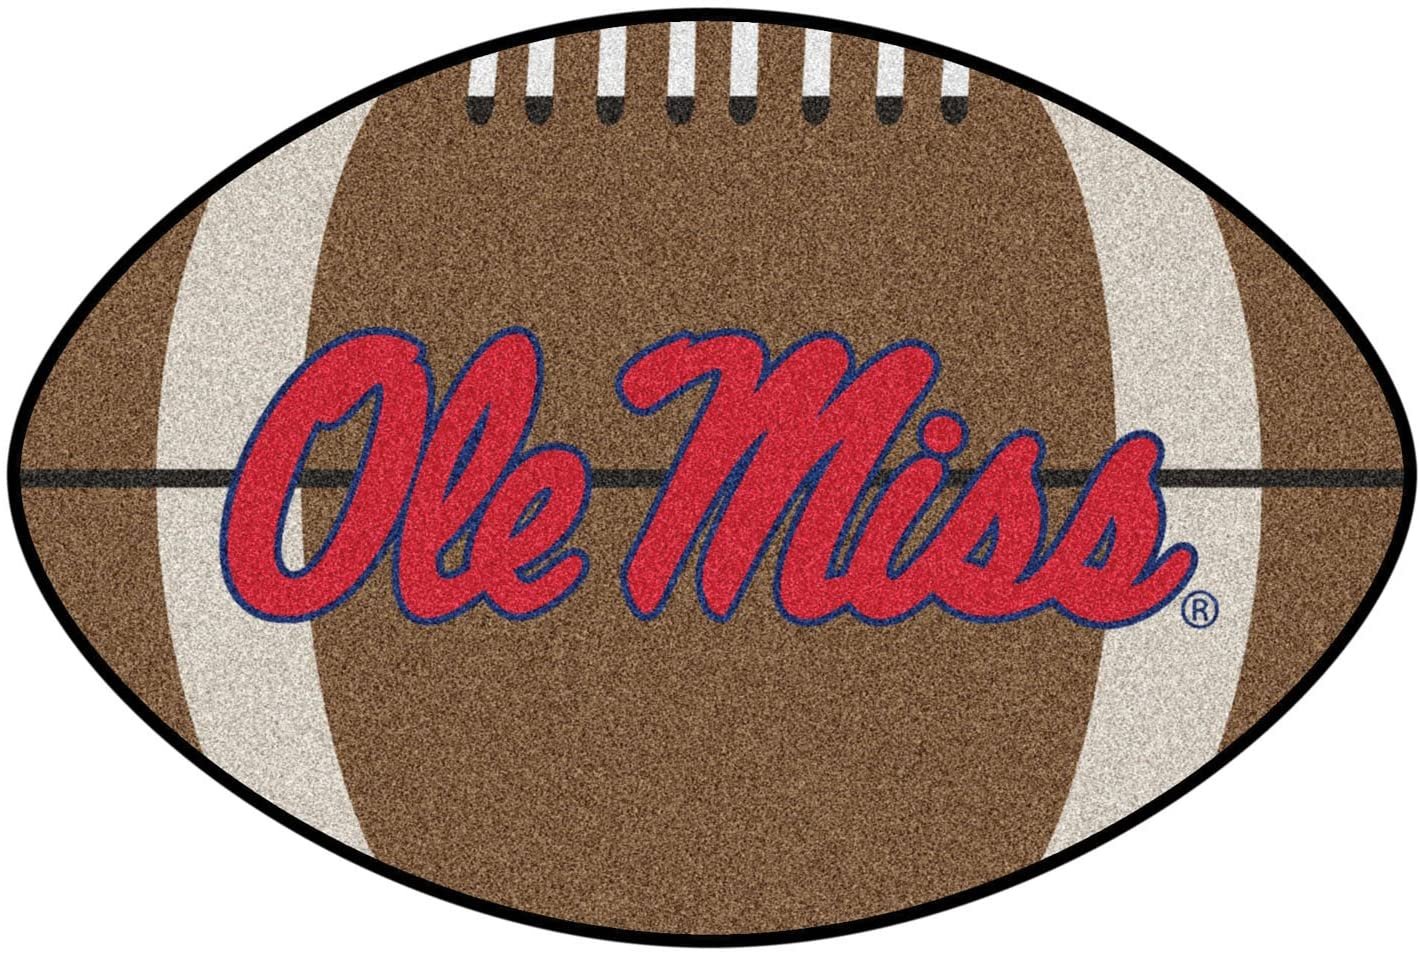 University of Mississippi Ole Miss Rebels Floor Mat Area Rug, 20x32 Inch, Non-Skid Backing, Football Design